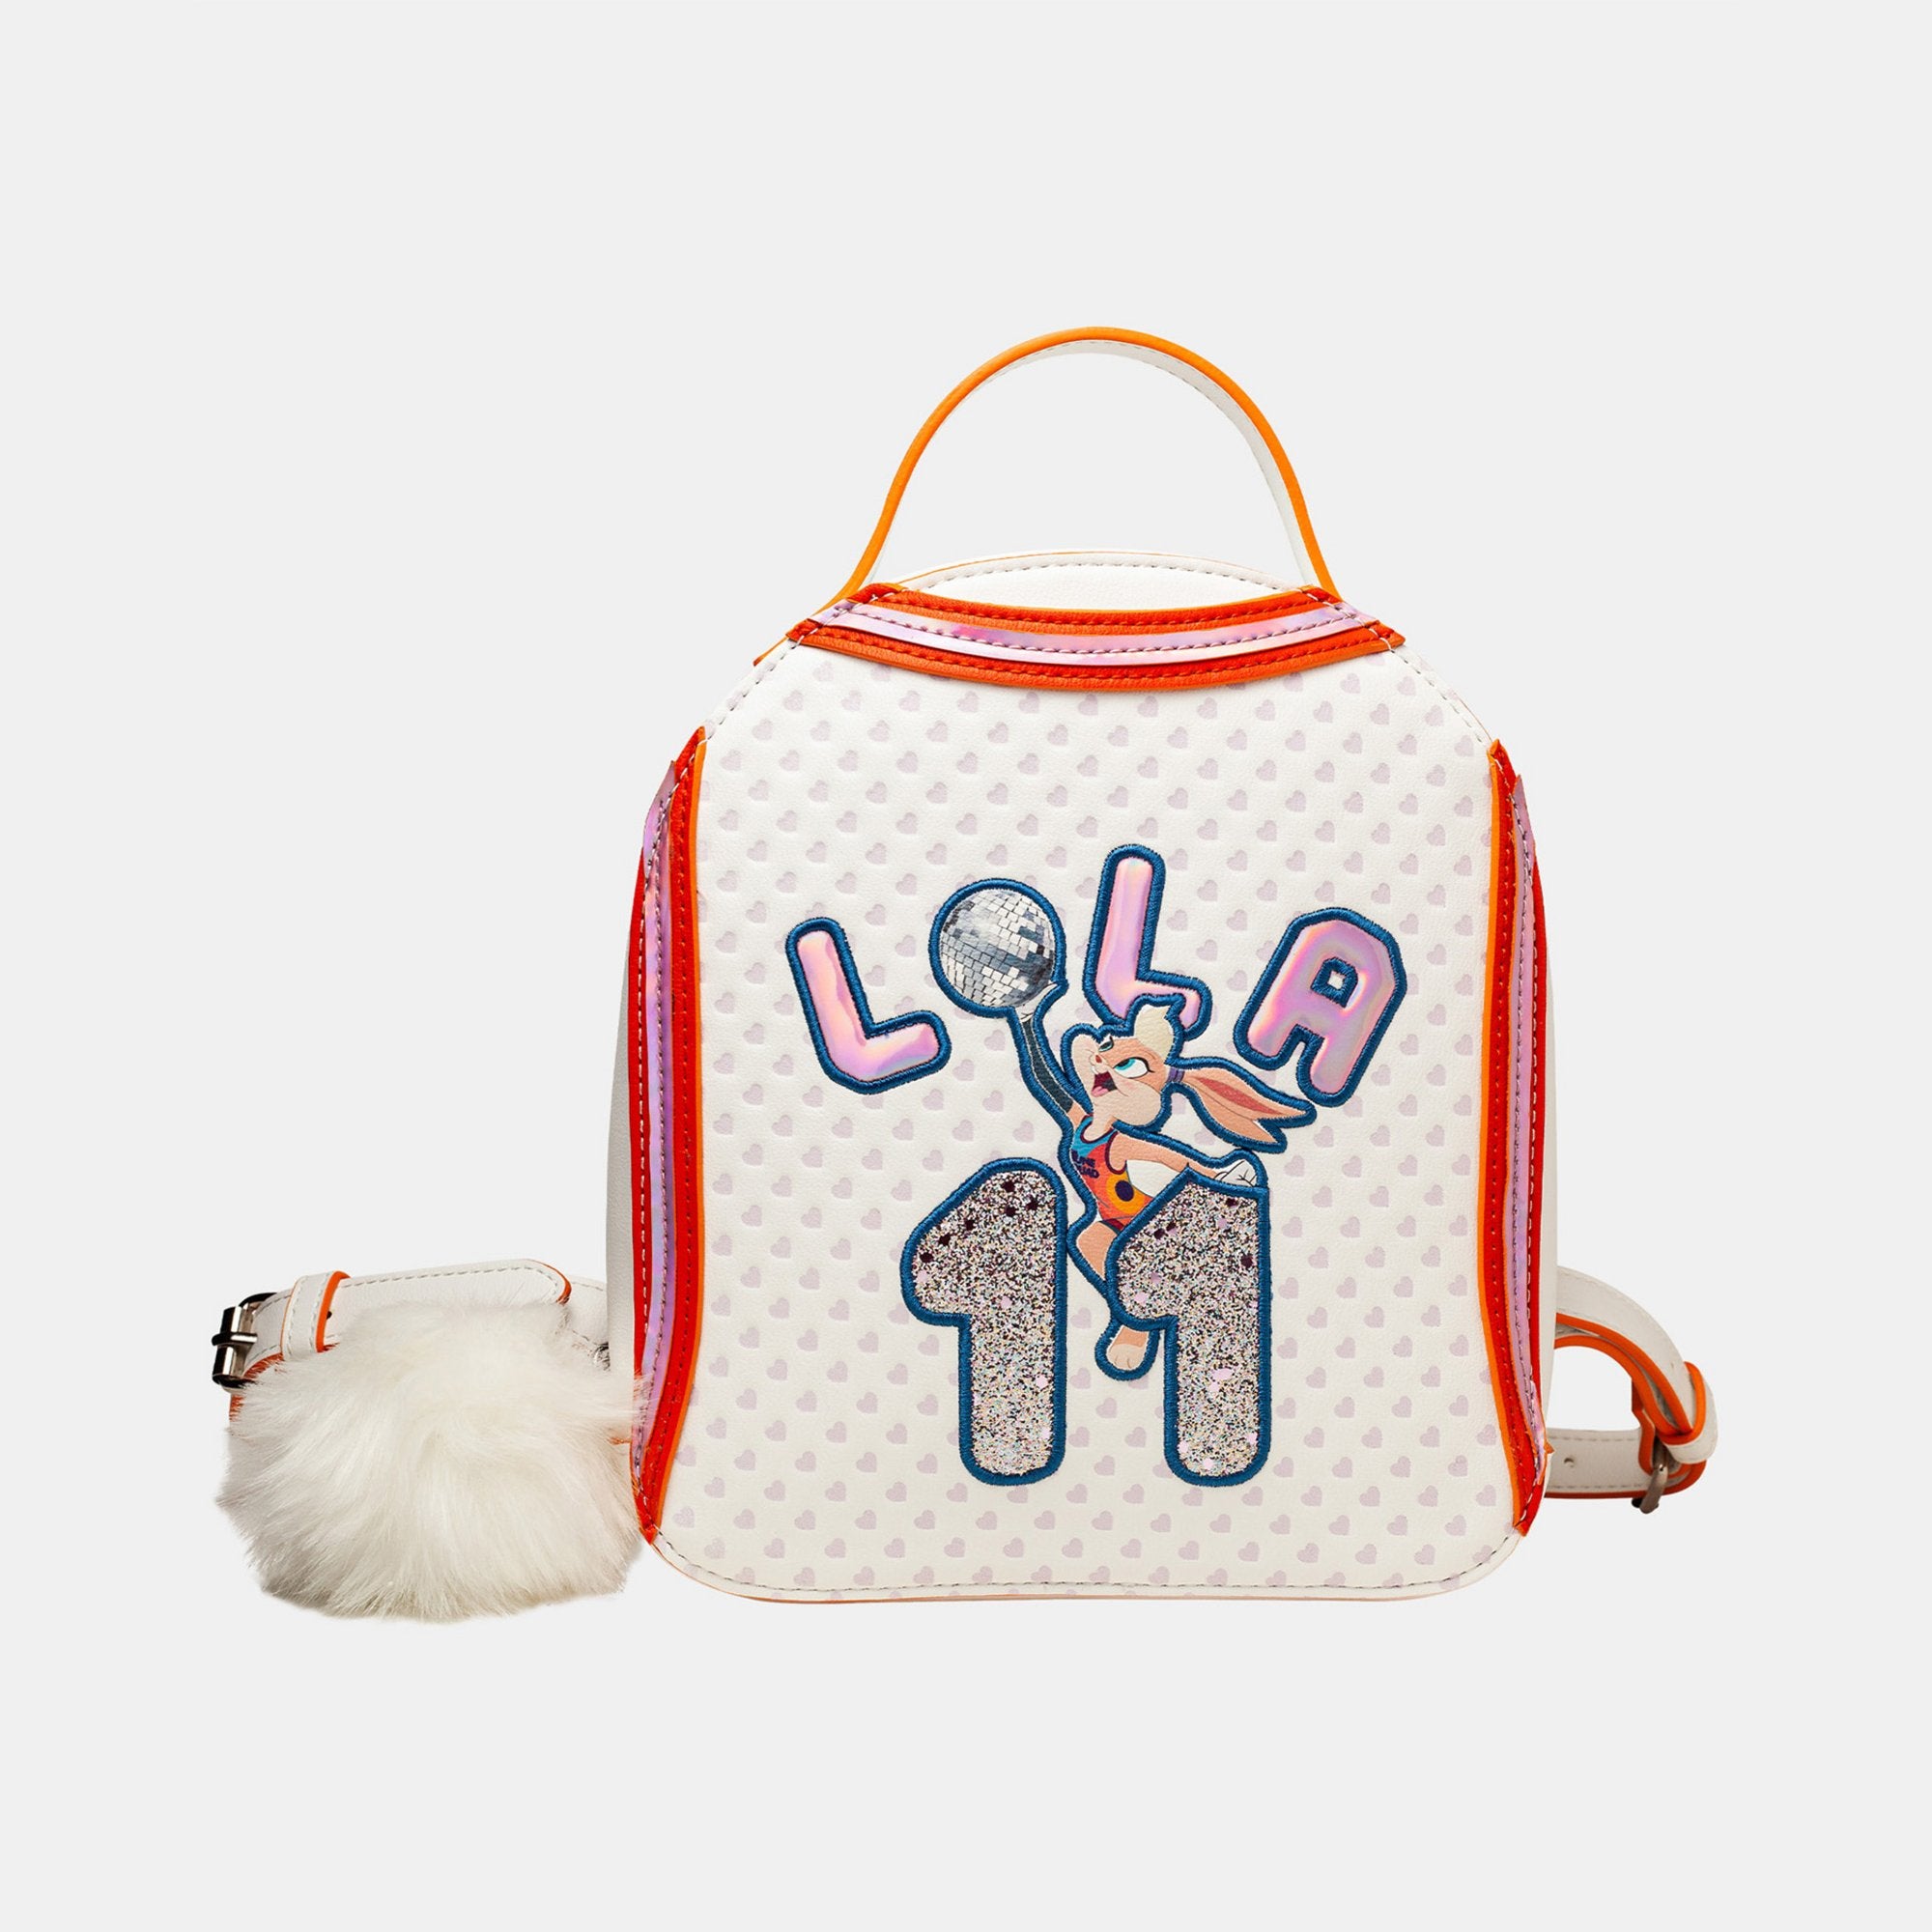 Space Jam 2 Mini Backpack - Lola Bunny